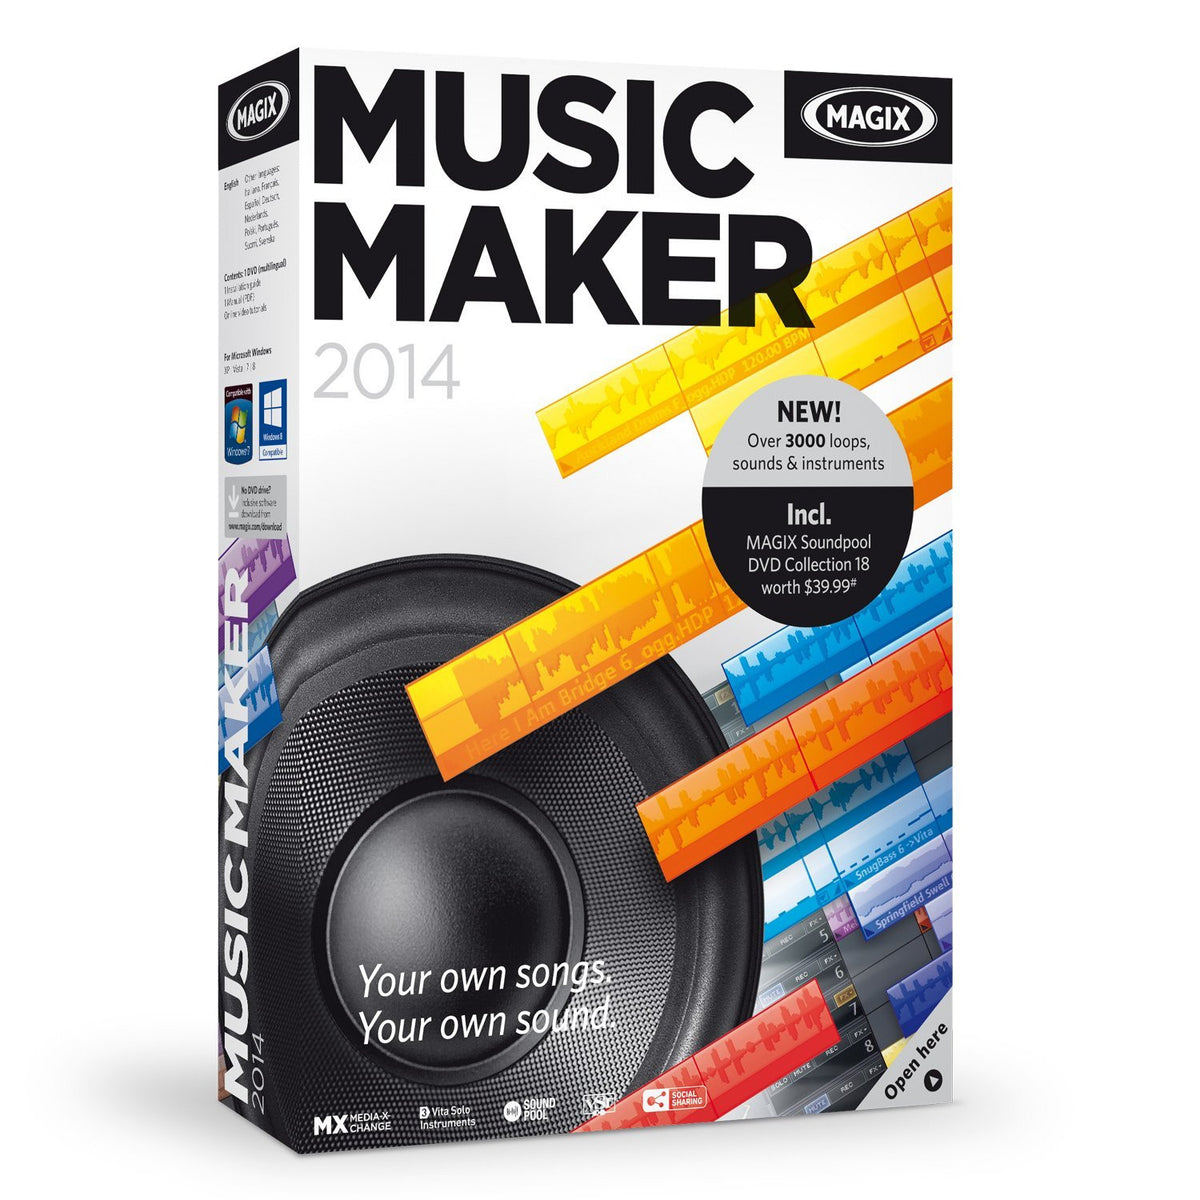 Music Maker 2014 by MAGIX CD-ROM